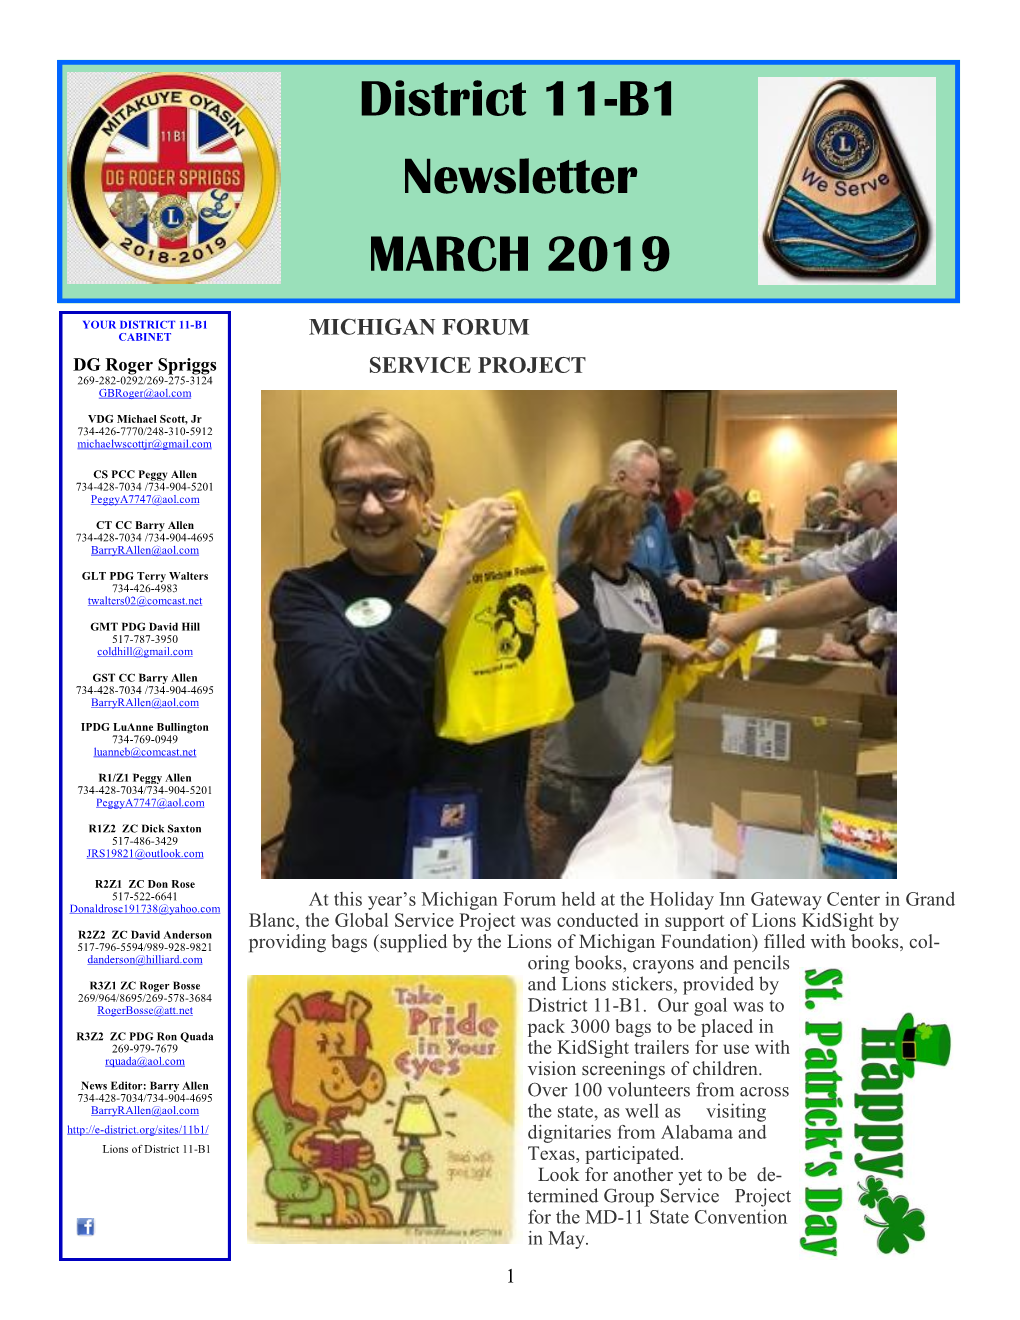 District 11-B1 Newsletter MARCH 2019